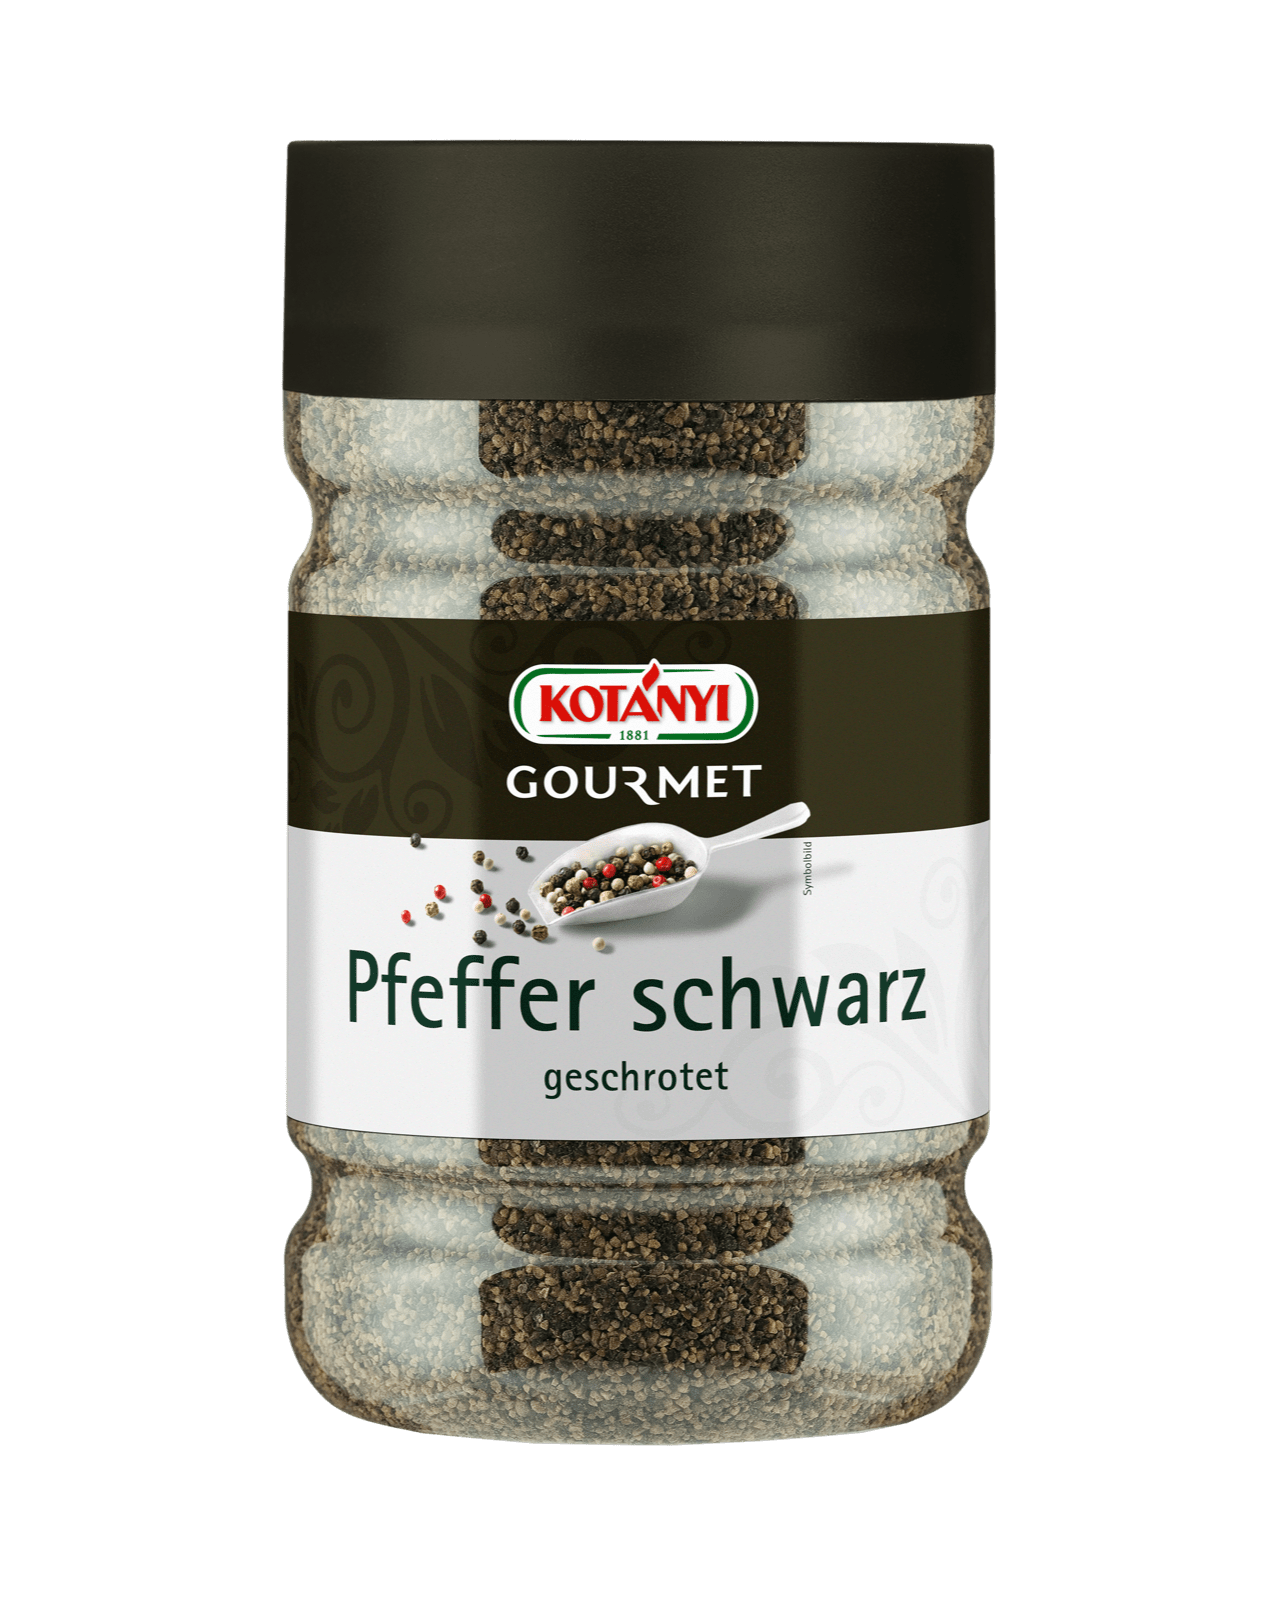 Pfeffer schwarz geschrotet | Kotányi Gourmet